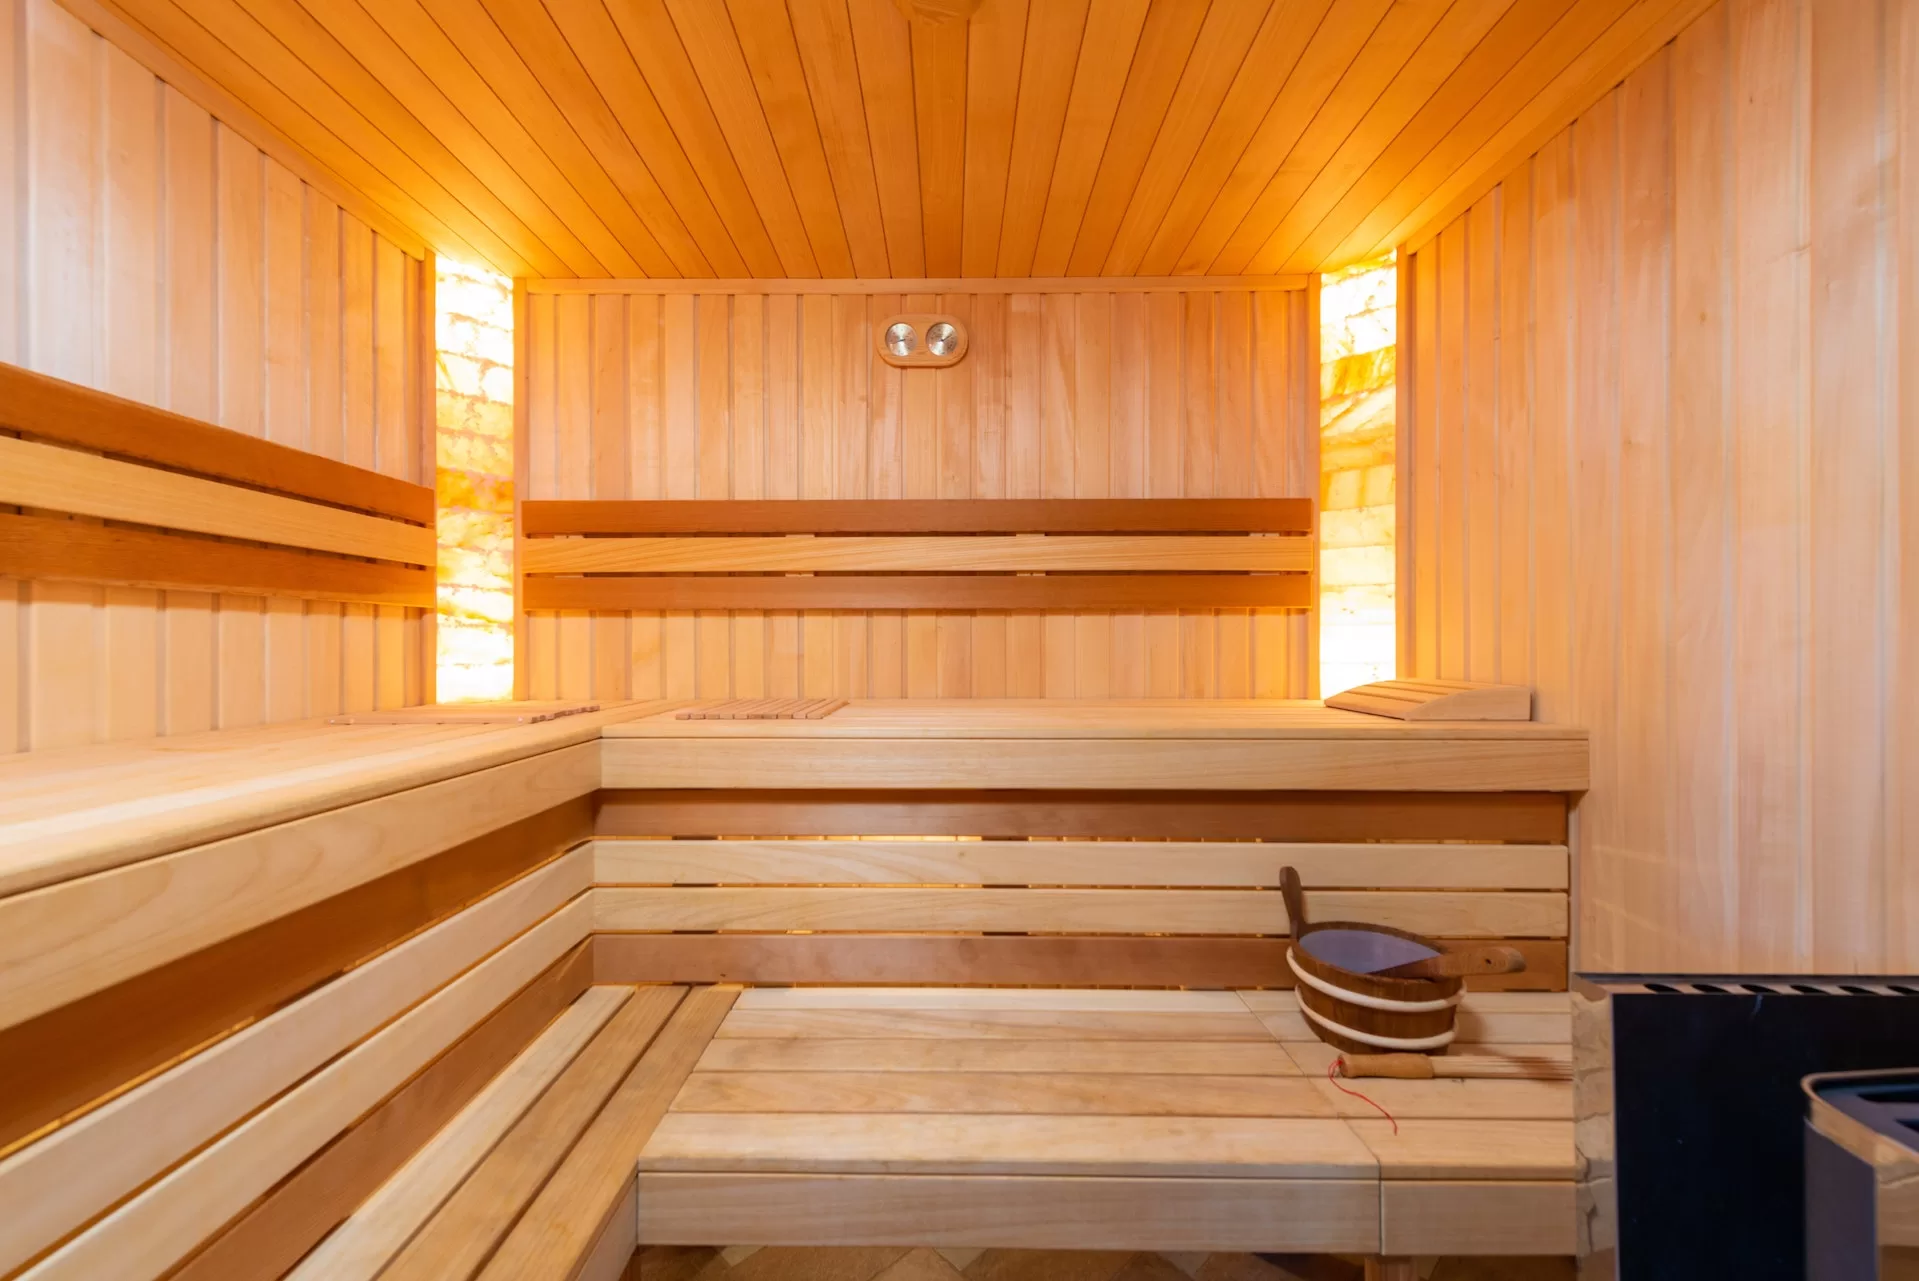 Health Benefits of Using a Sauna